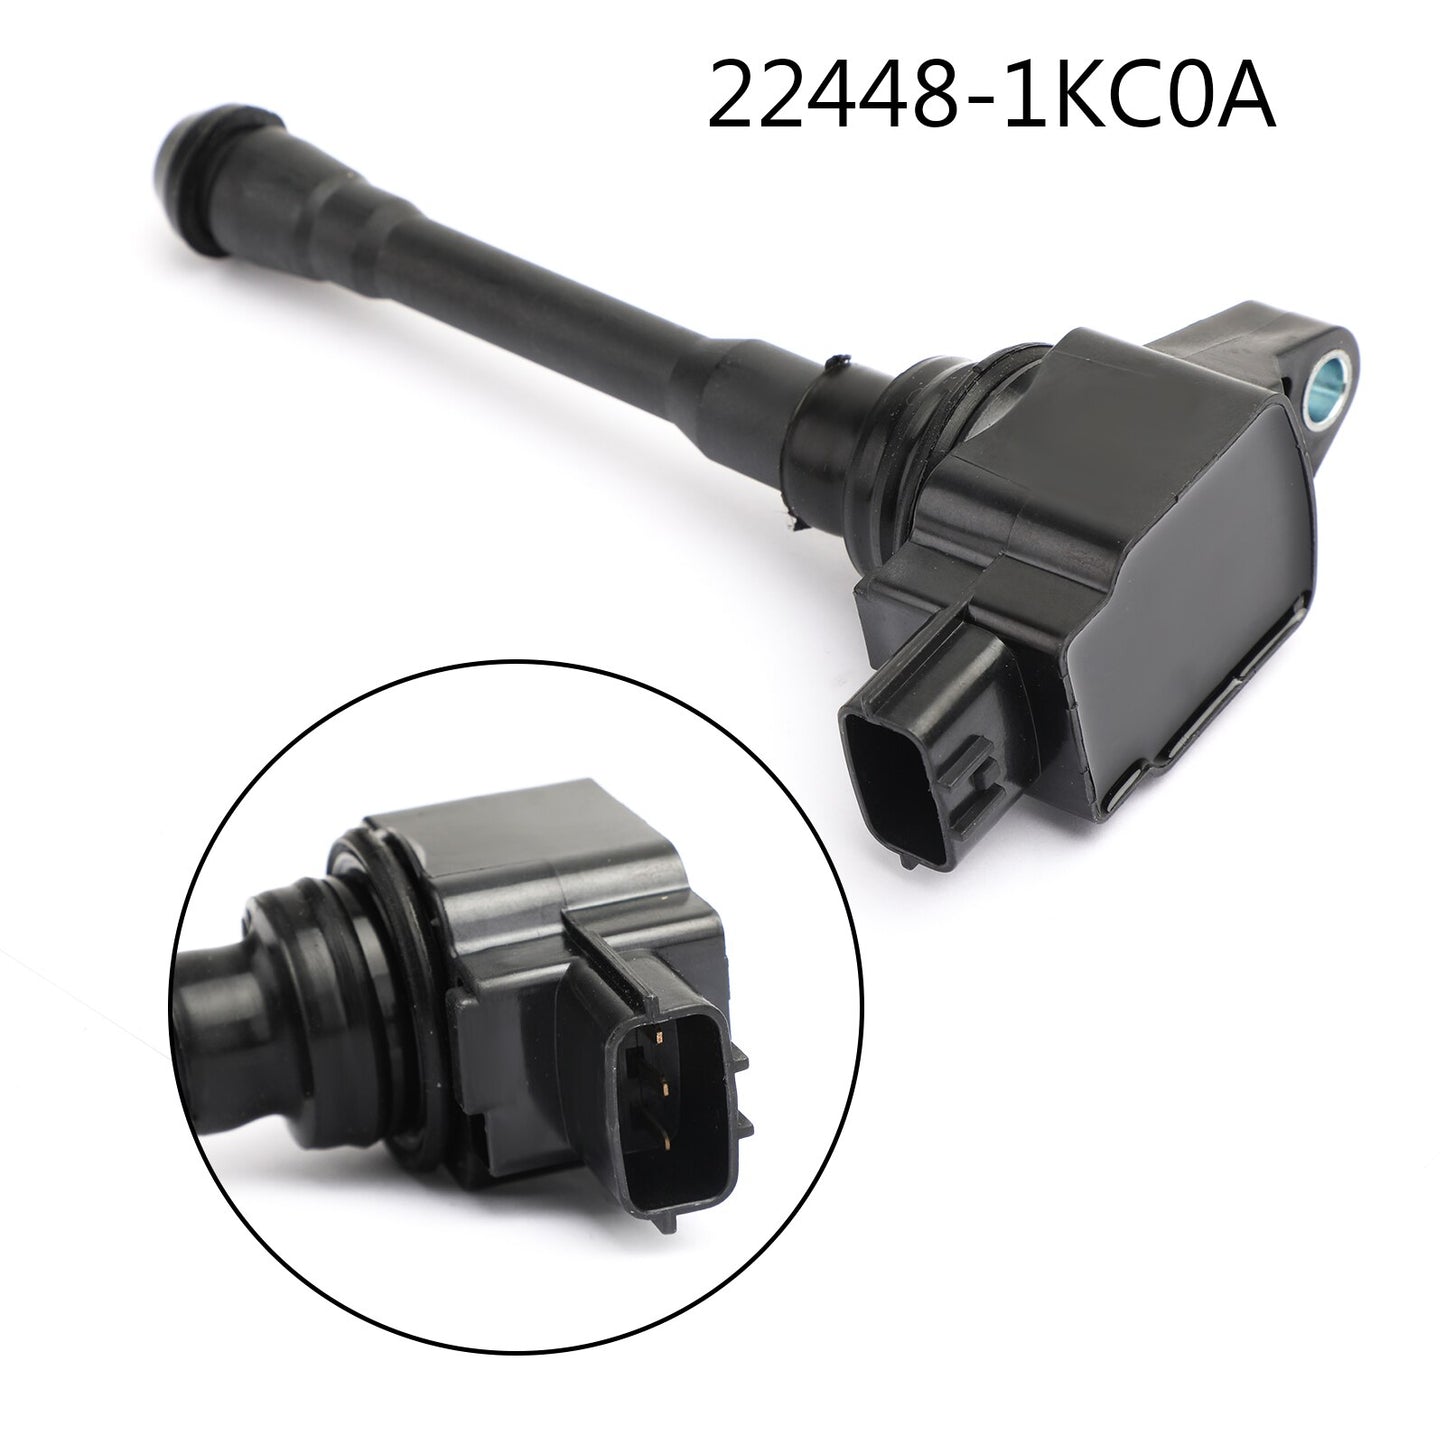 22448-1KC0A  224481KC0A 22448 1KC0A Ignition Coil Fit for Nissan Juke Sentra